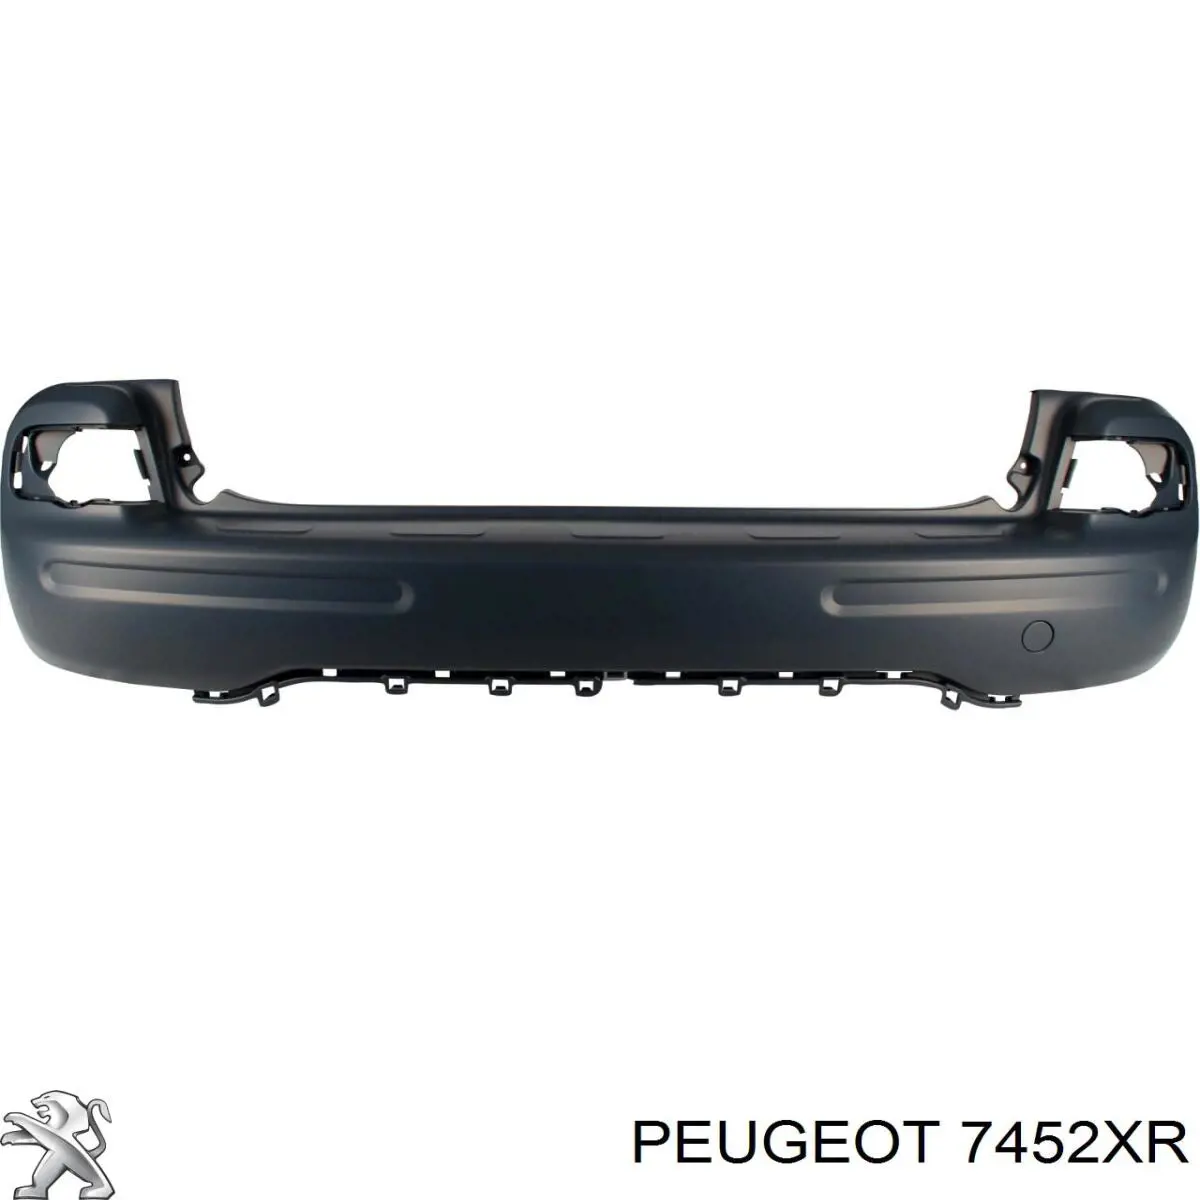 7452XR Peugeot/Citroen parachoques trasero